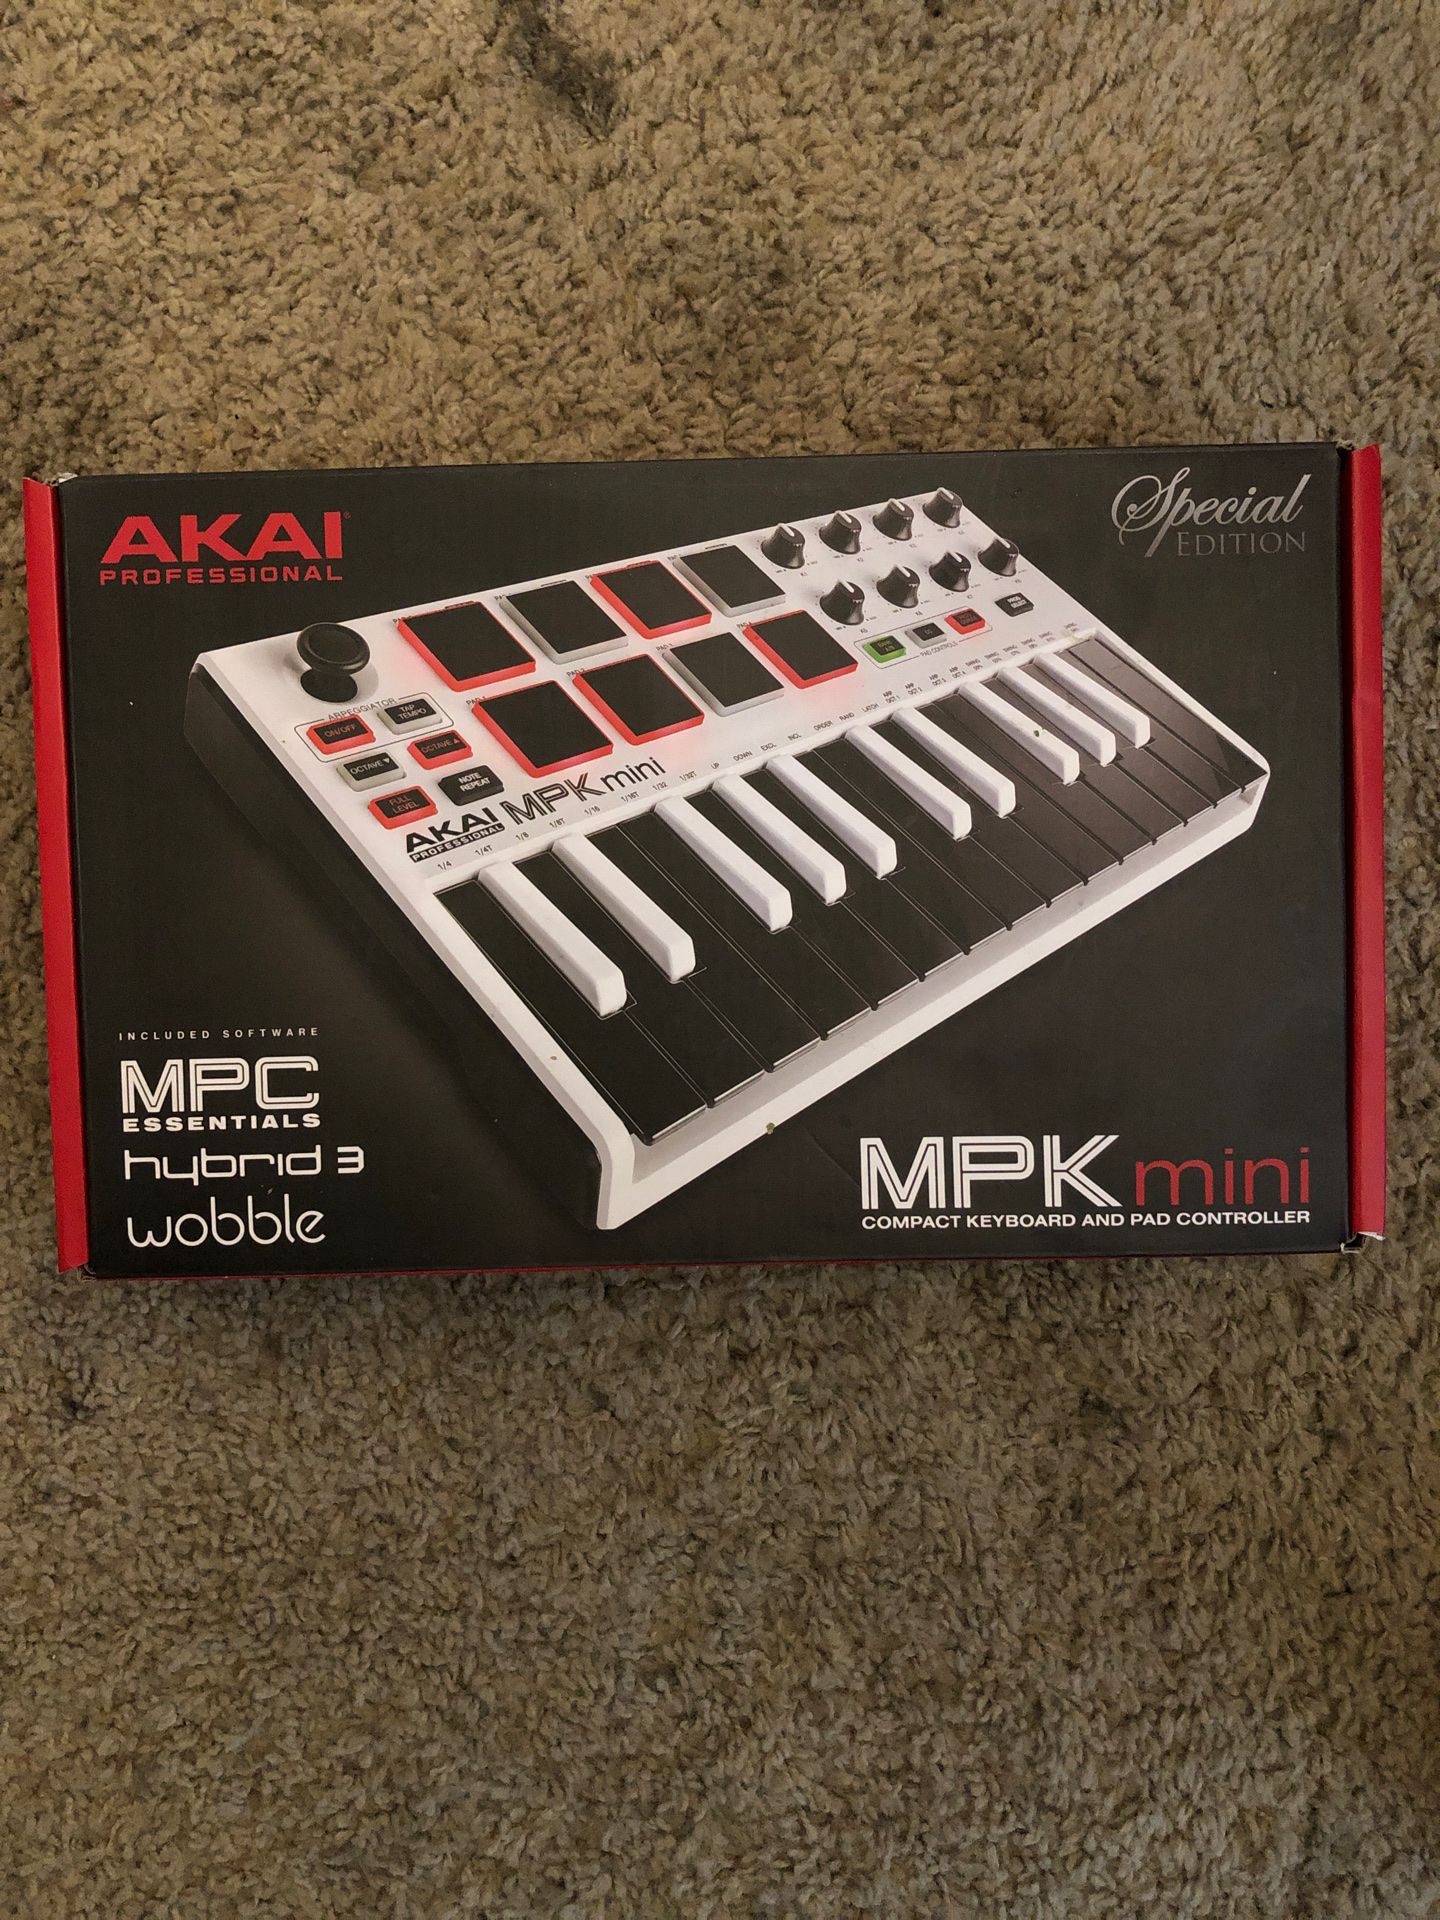 AKAI MPK MINI SPECIAL ADDITION AUDIO MIDI KEYBOARD